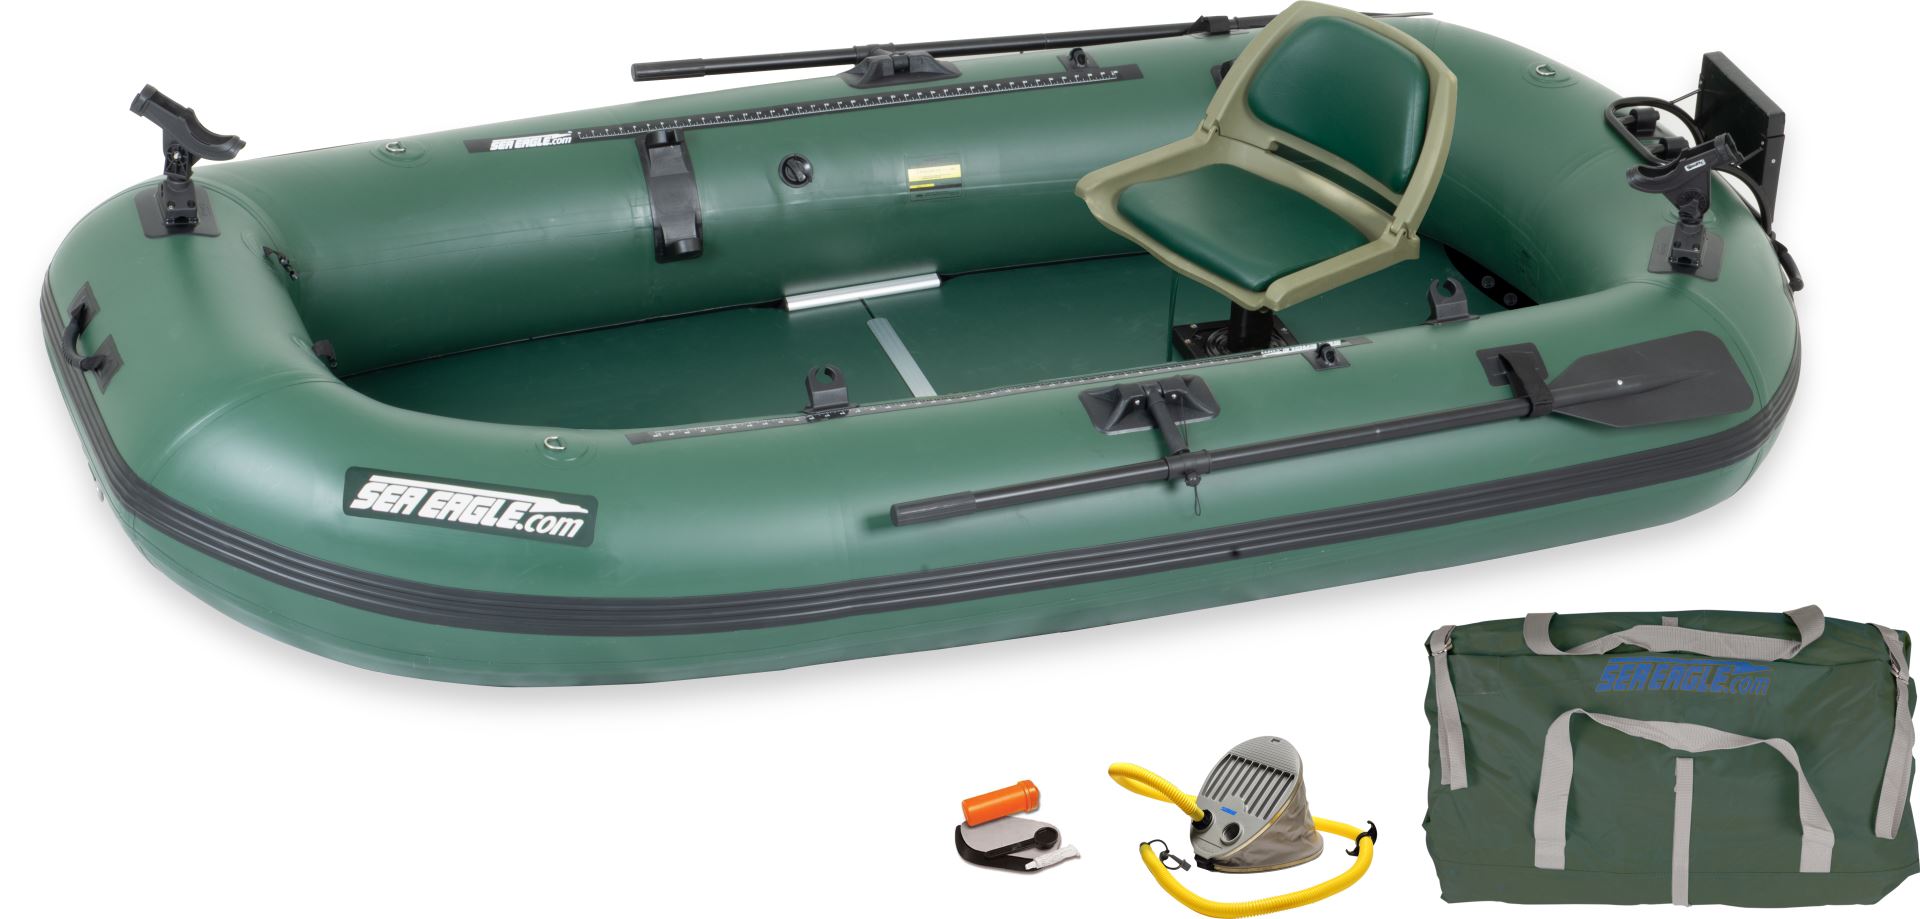 Sea Eagle STS10 Honda Motor Inflatable Fishing Boats Package